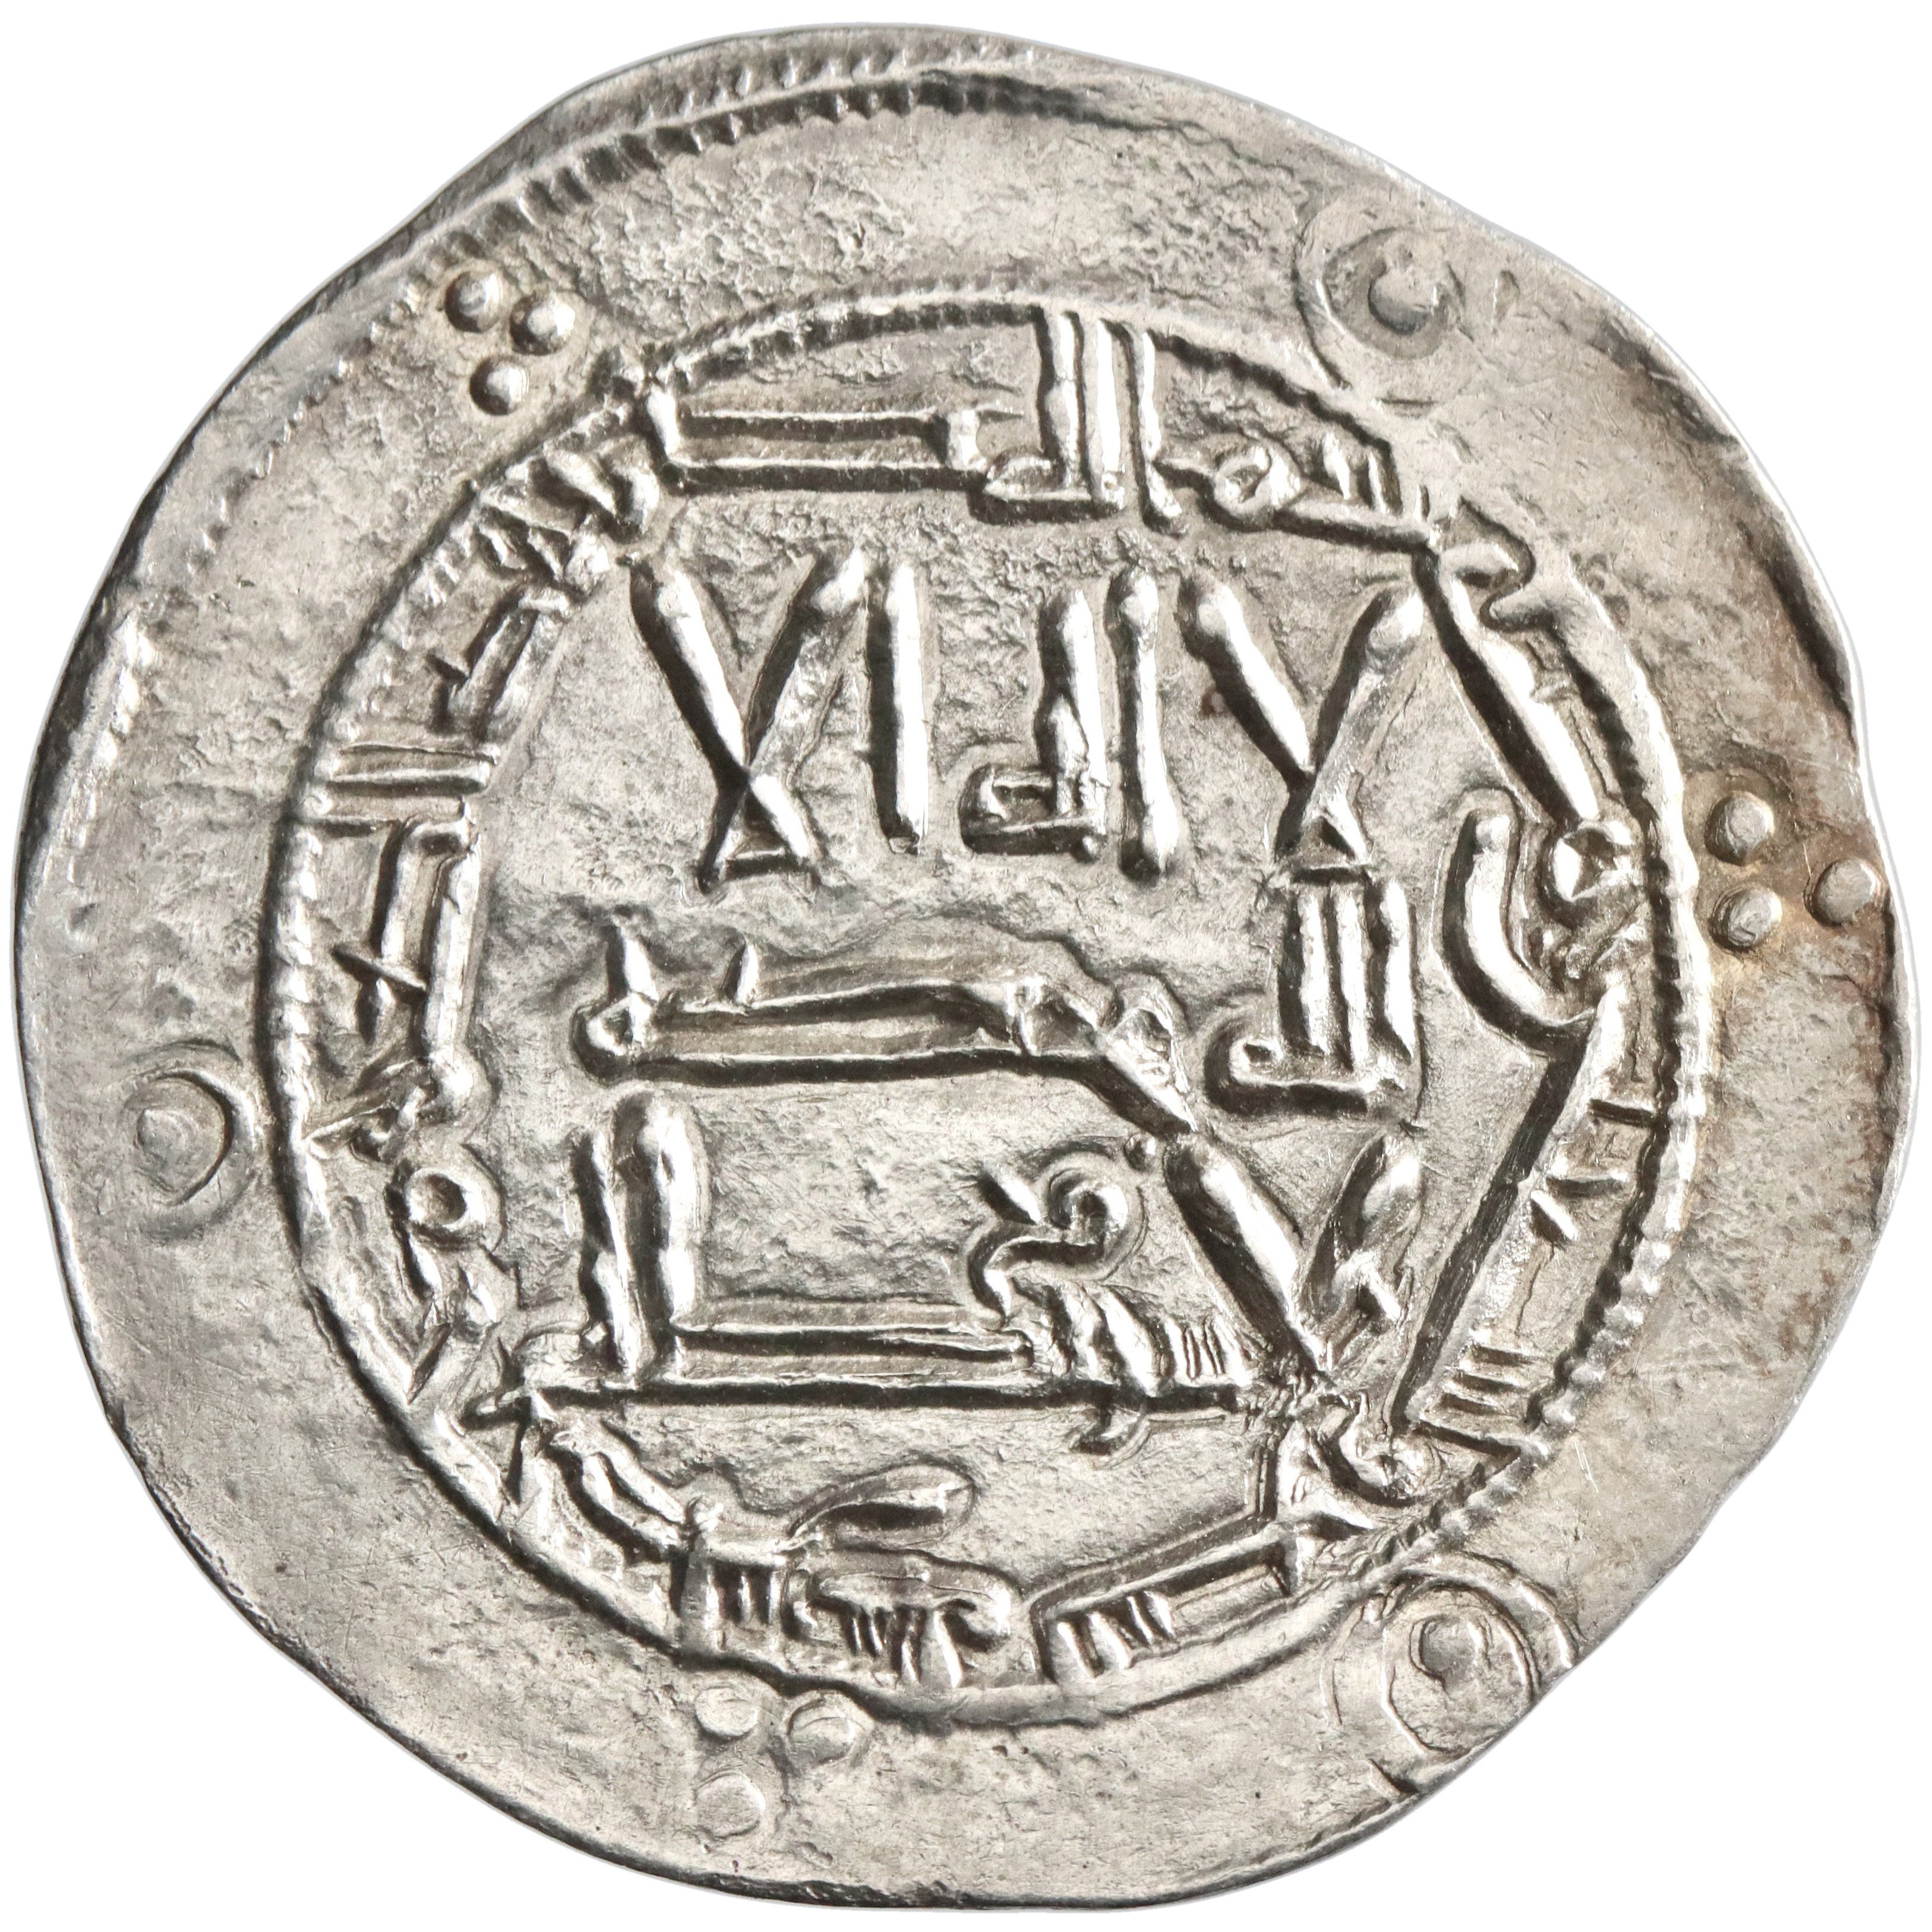 Umayyad of Spain, al-Hakam I, silver dirham, al-Andalus (Spain) mint, AH 199